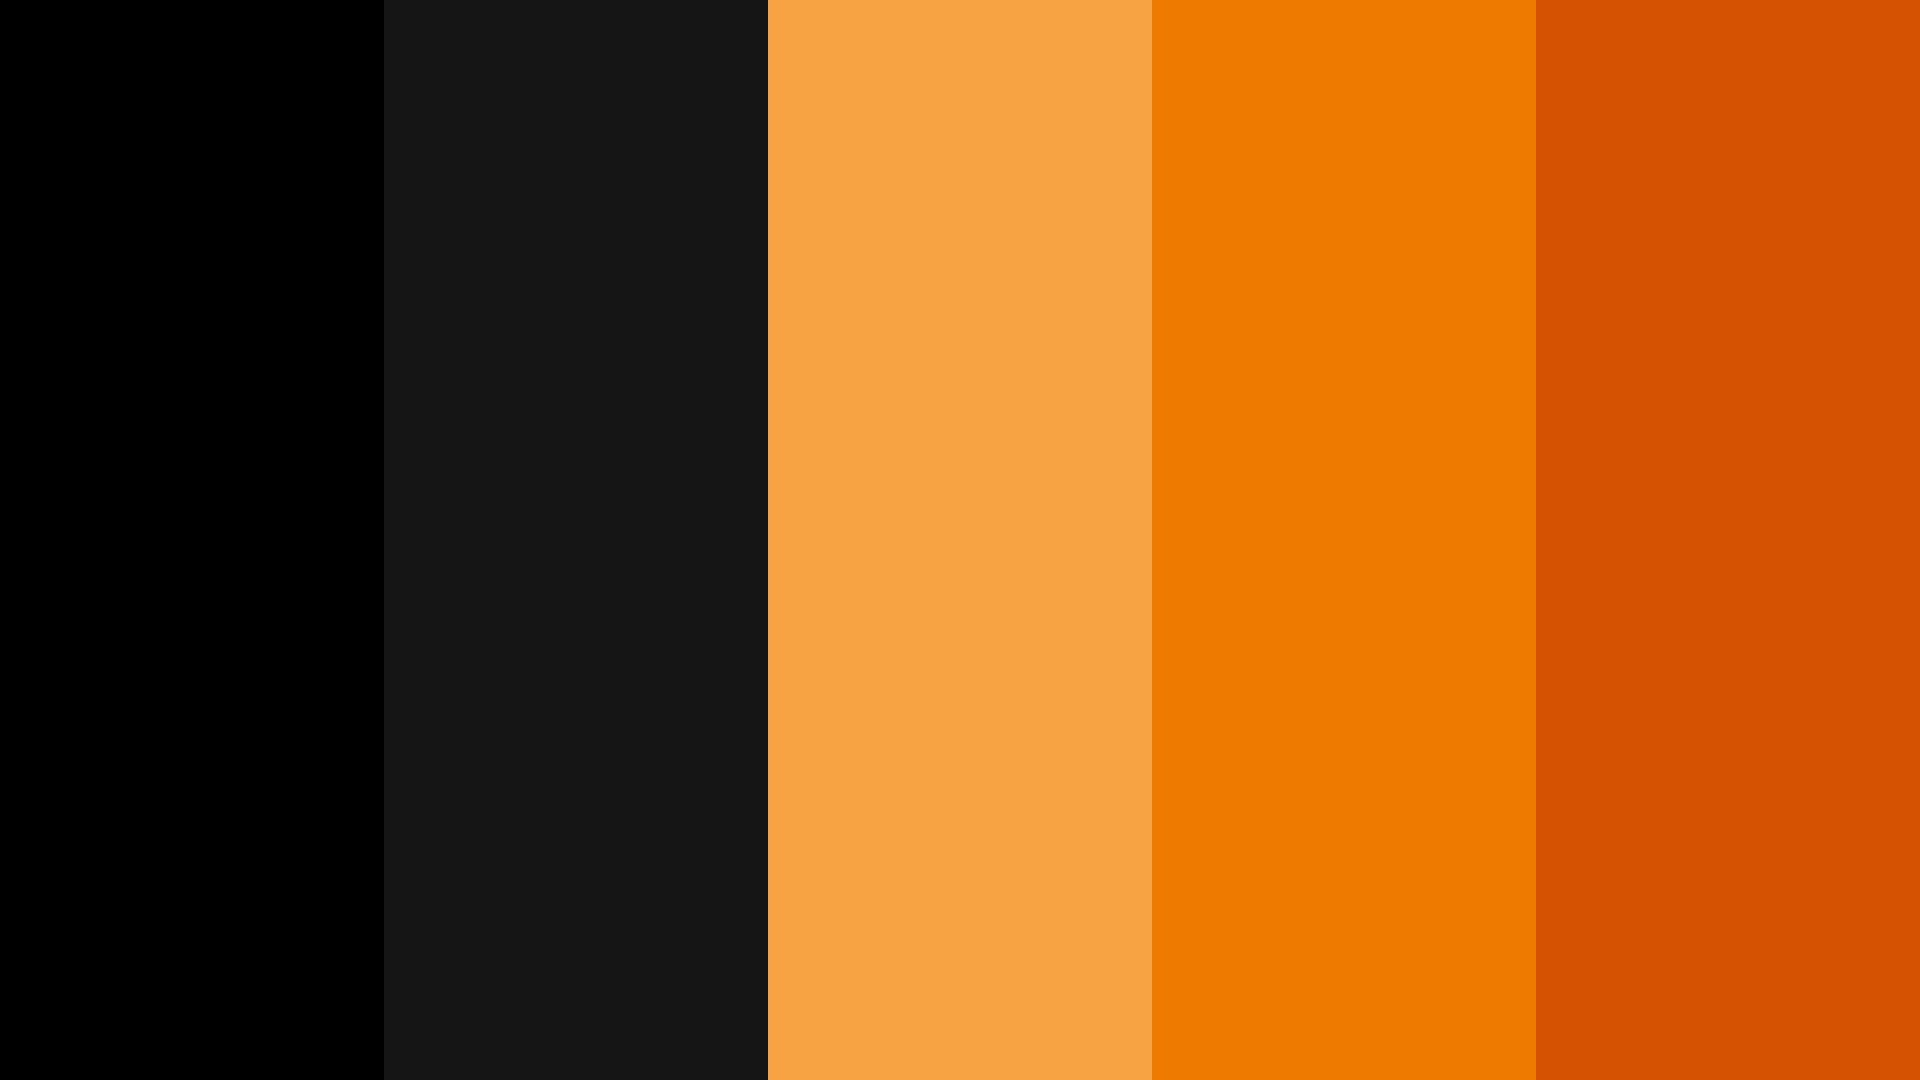 Unllamativo Diseño Abstracto En Negro Y Naranja Como Fondo De Pantalla De Computadora O Móvil. Fondo de pantalla